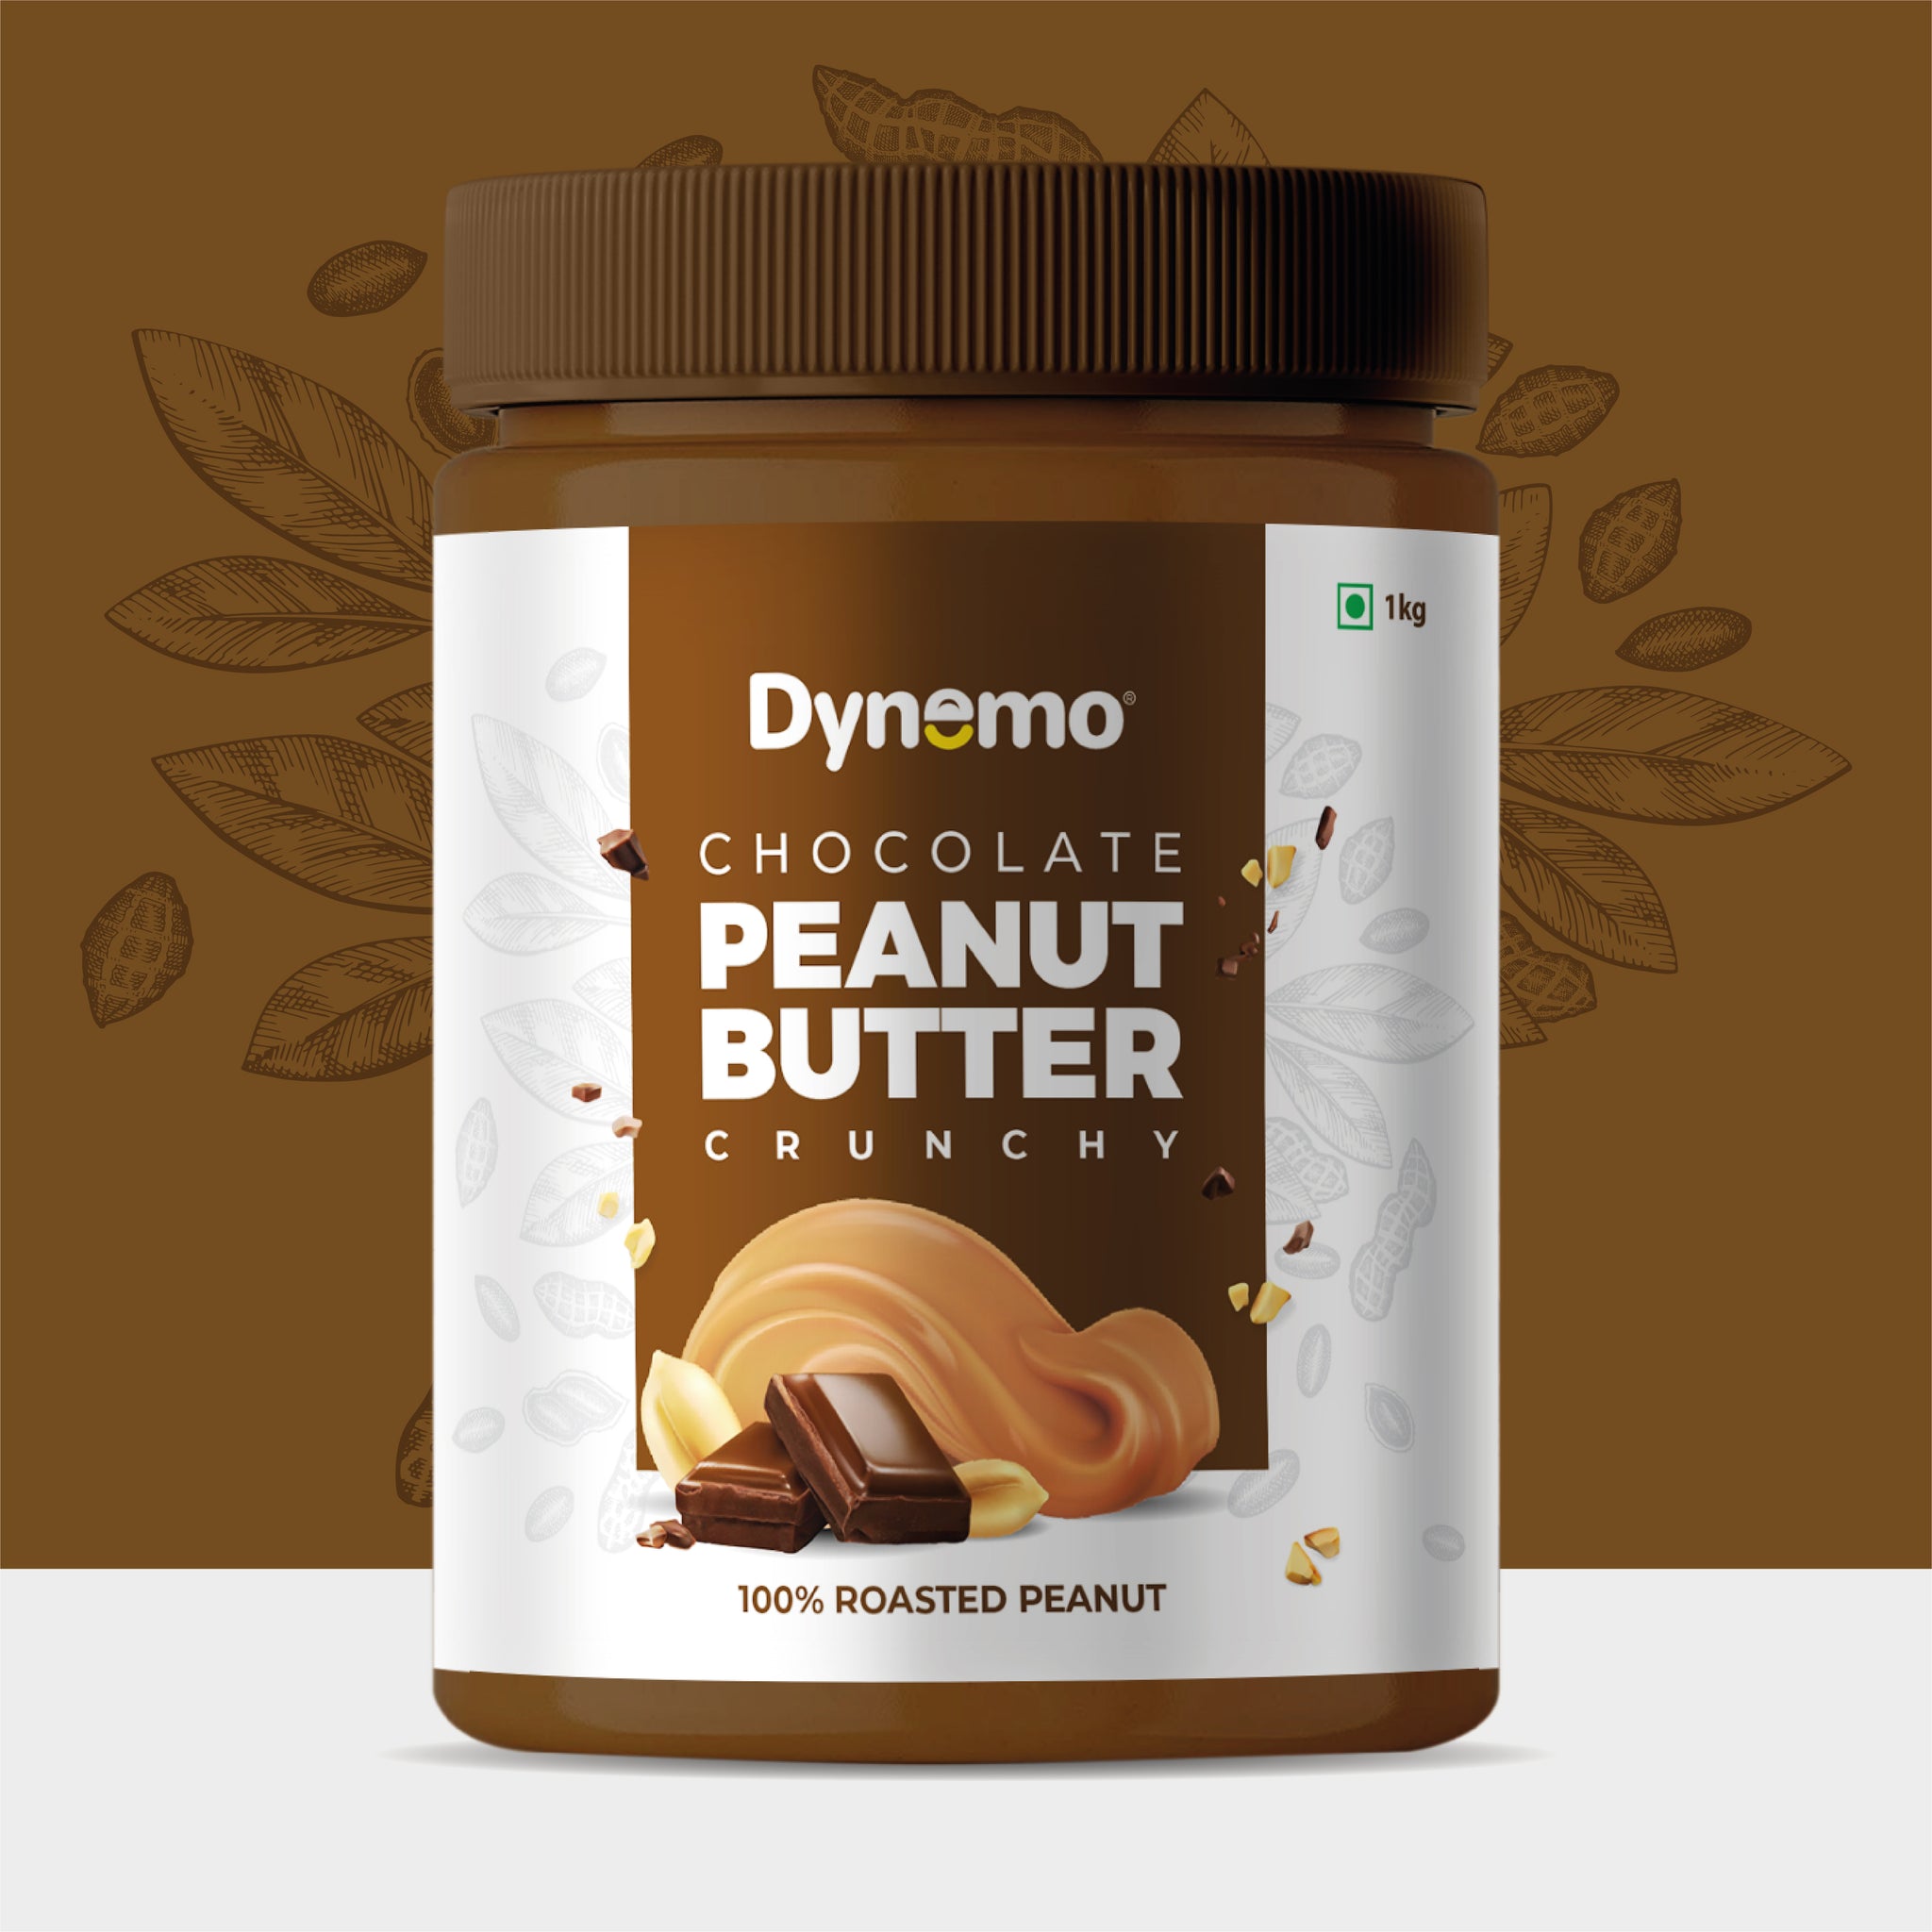 Dynemo Chocolate Crunchy Peanut Butter